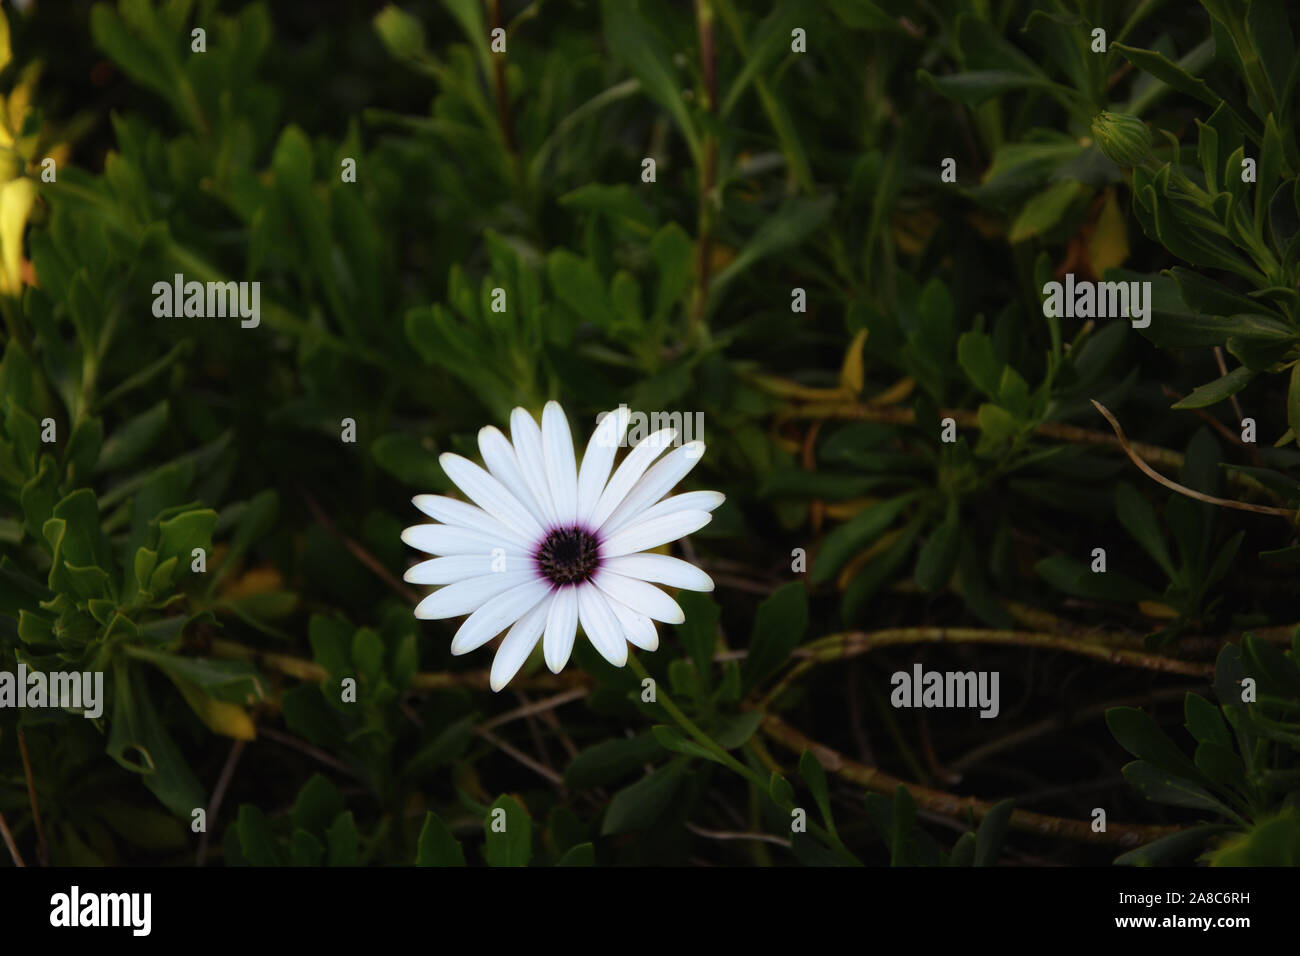 White daisy in green grass, innocence. Stock Photo